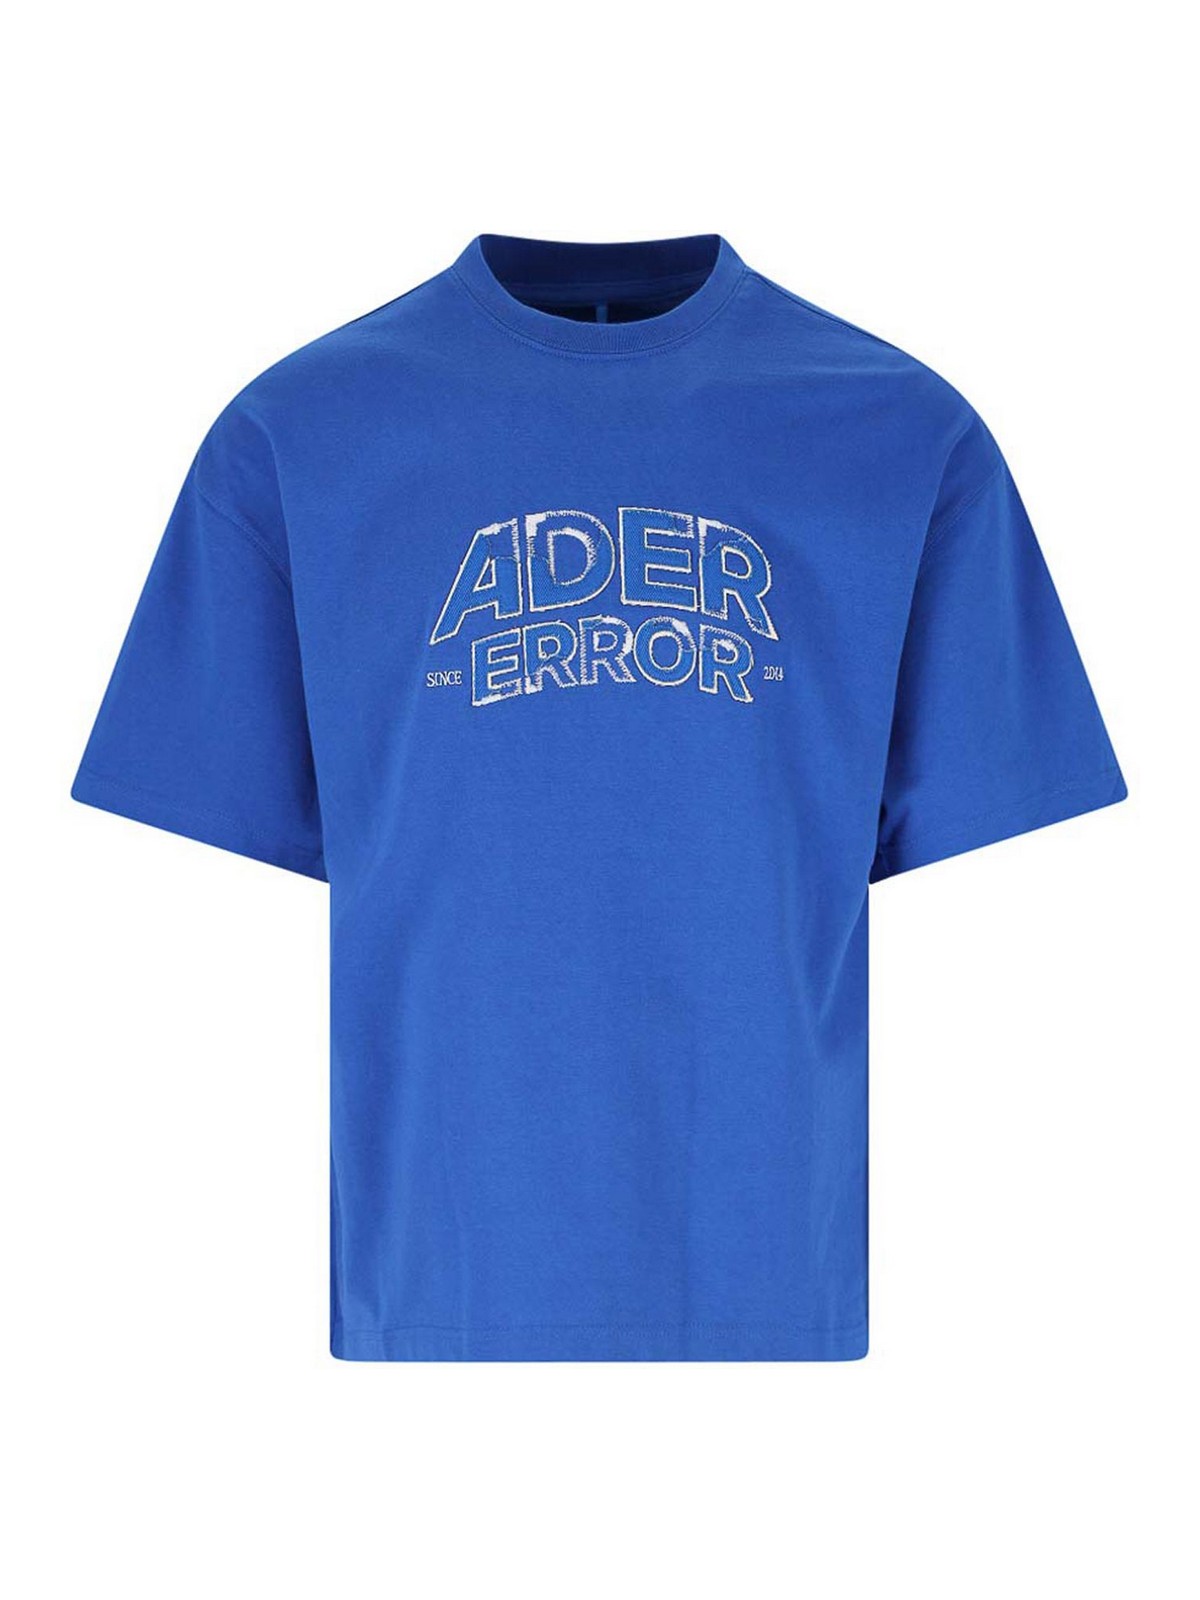 T-shirts Adererror - T-shirt logo - BMADFWTS0104BLBLUE